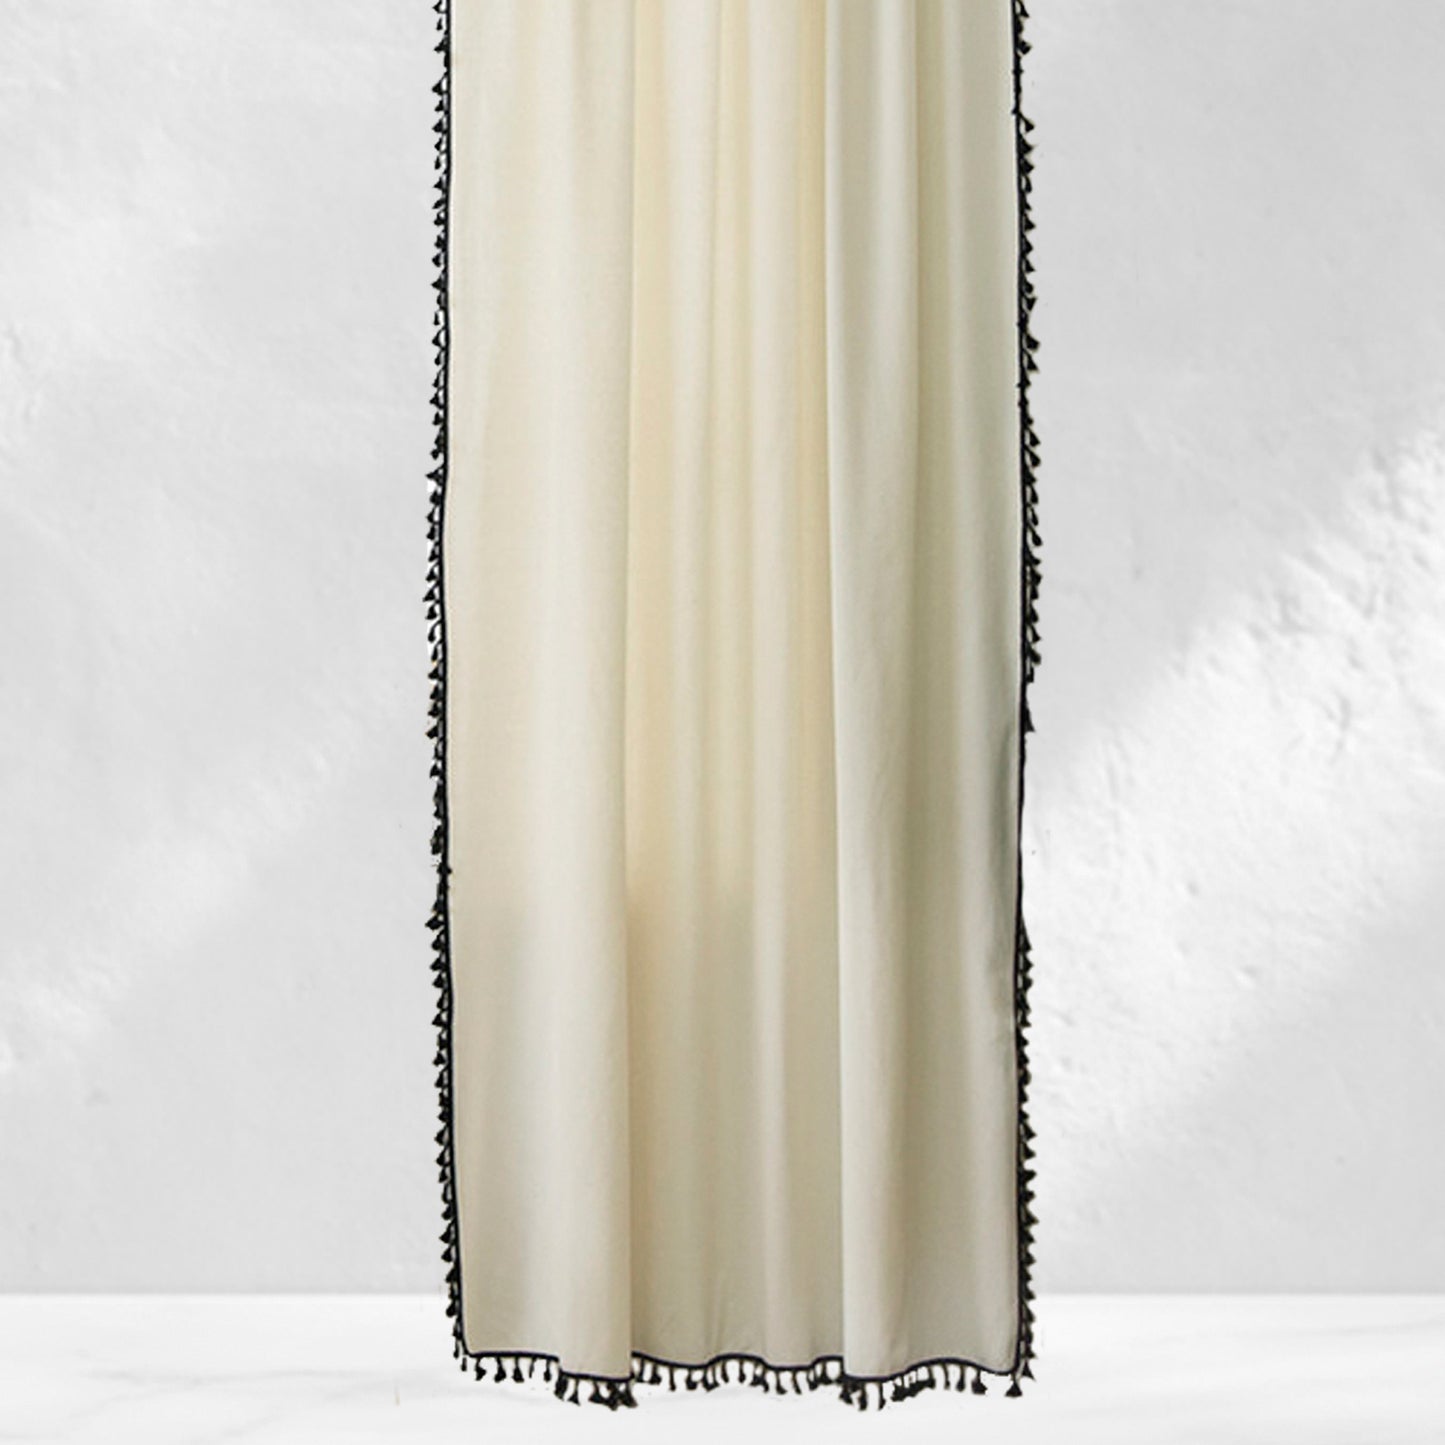 Beige Curtains with Black Tassels